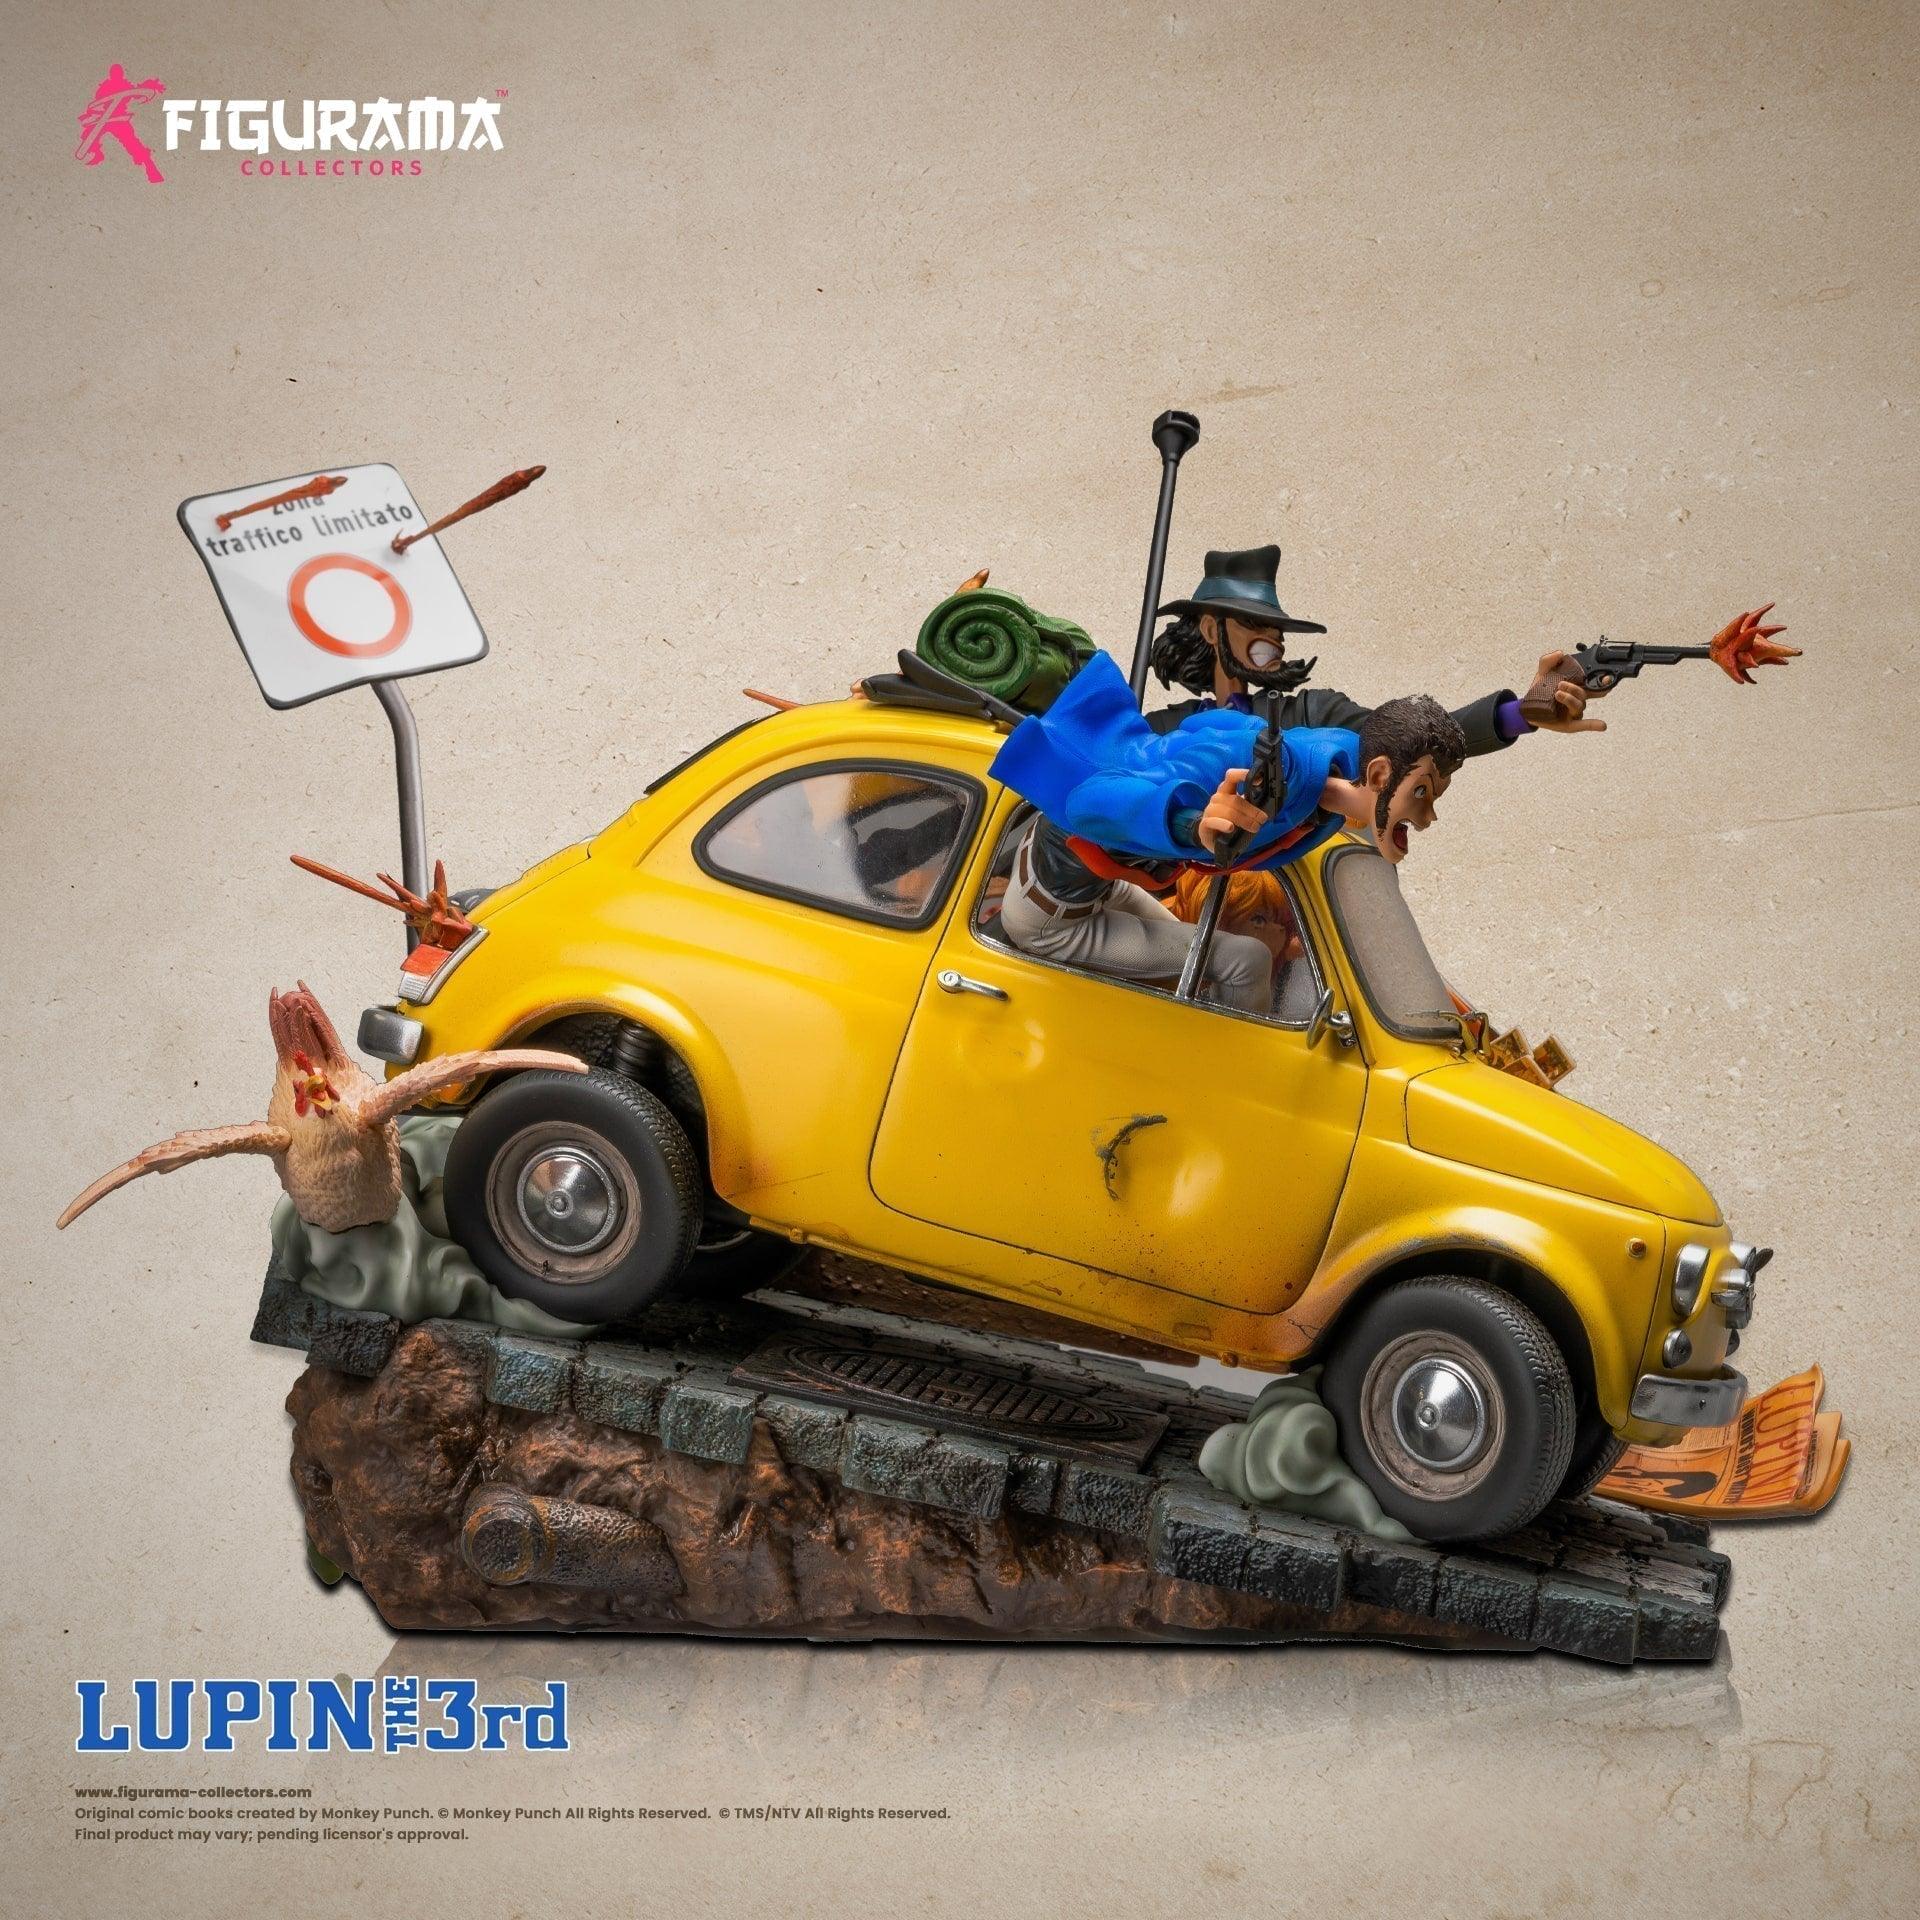 Plan-4- Flexible plan 06 Months- Lupin The 3rd - Lupin, Jigen, & Fujiko Figure Resin Figures Figurama Collectors 